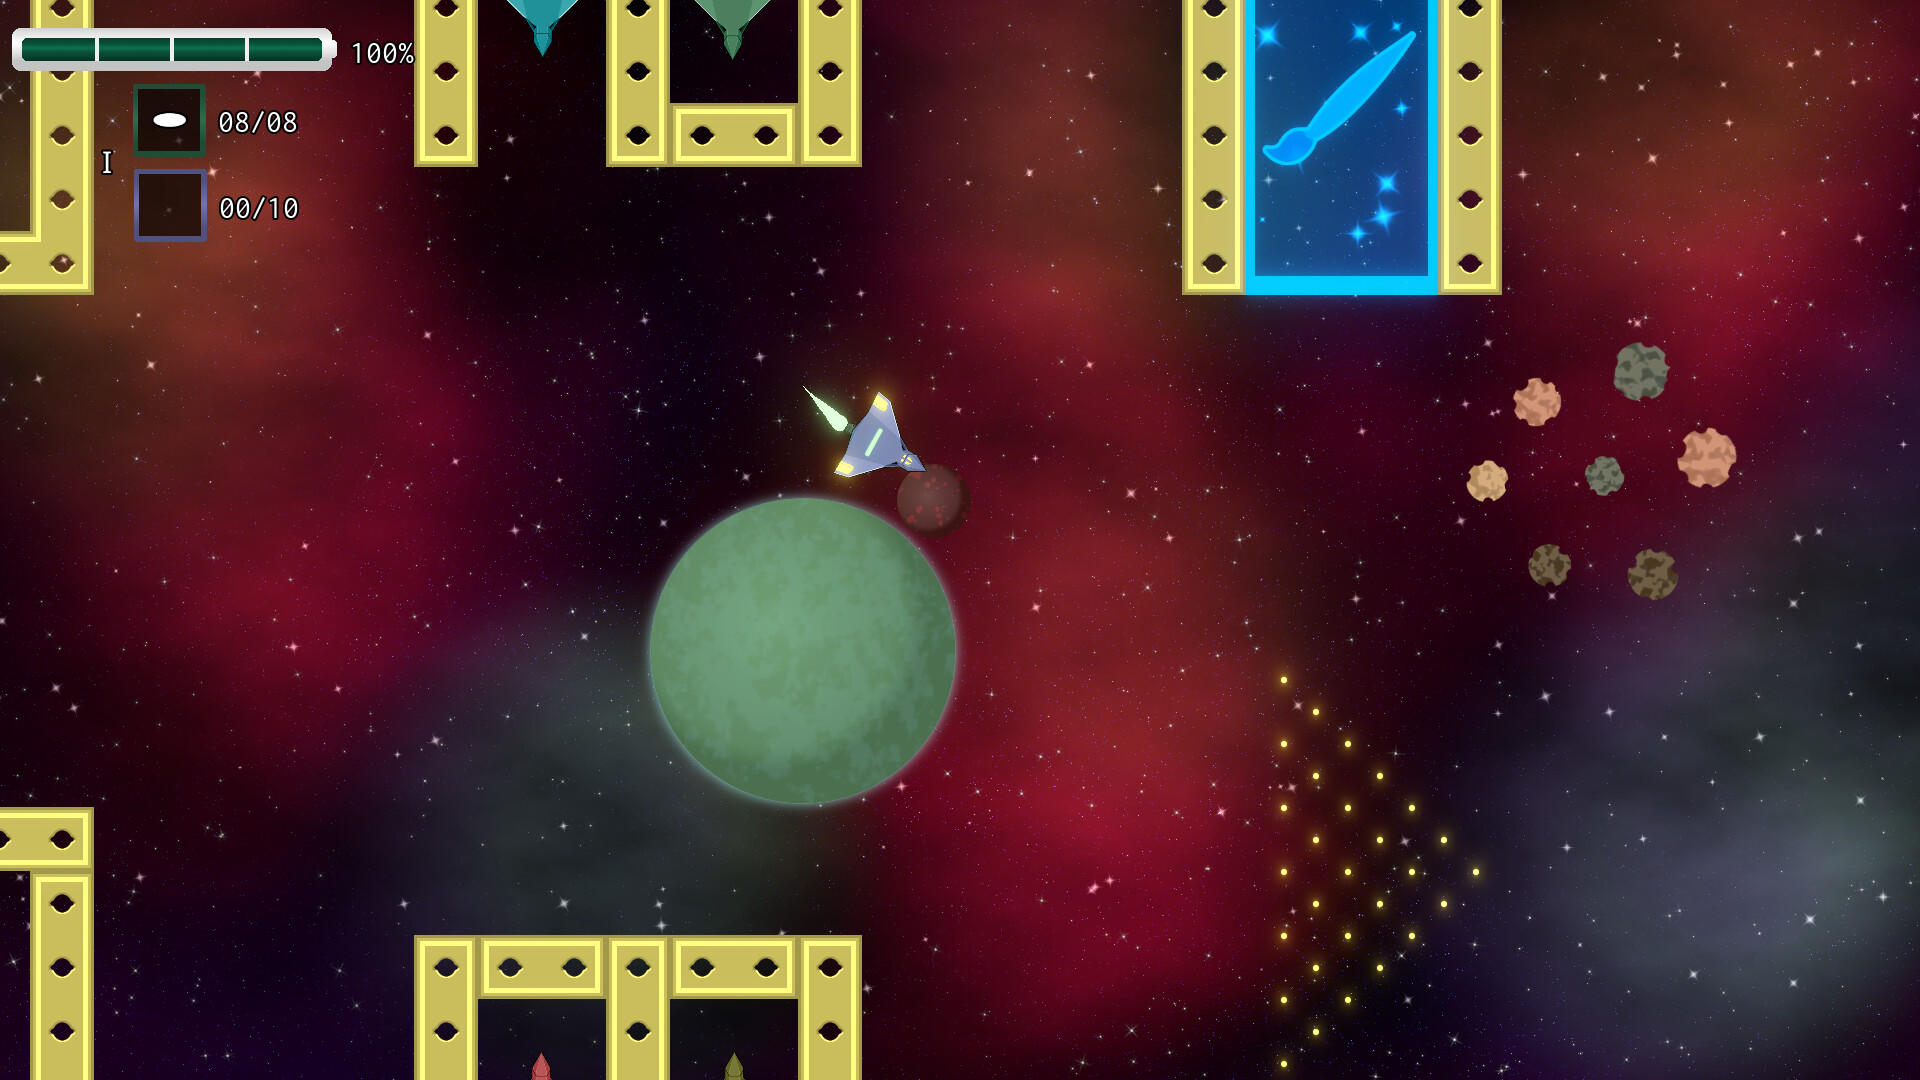 Screenshot 1 of Galassia Oscura 